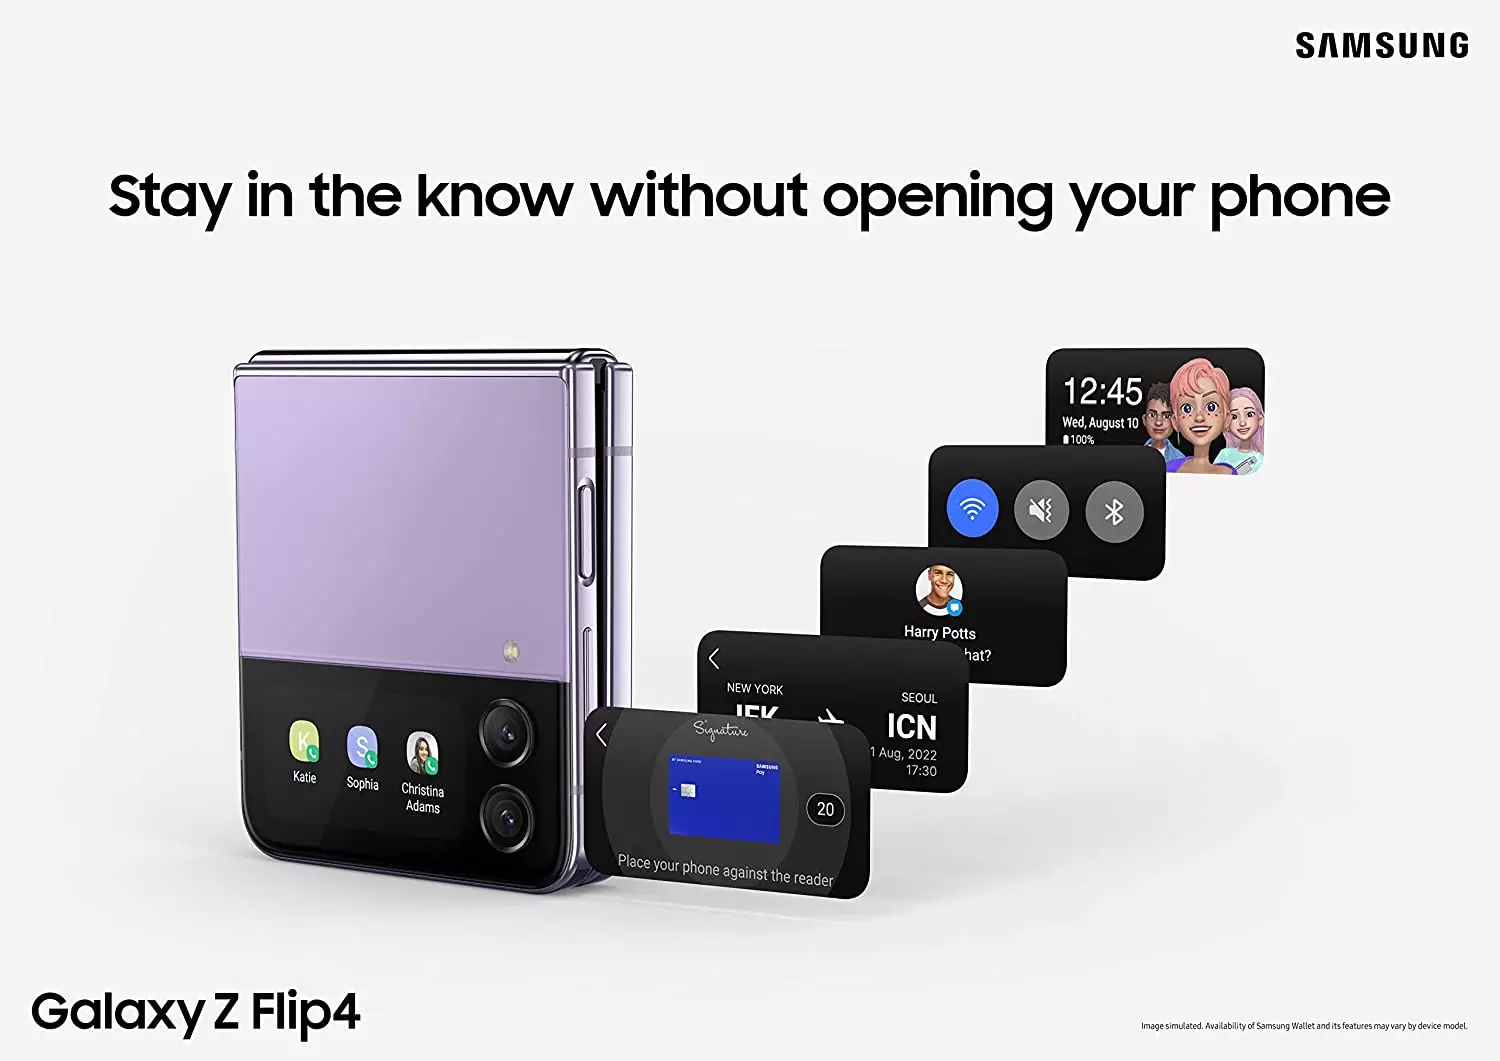 The Mind Blowing High Tech Samsung Galaxy Z Flip 4